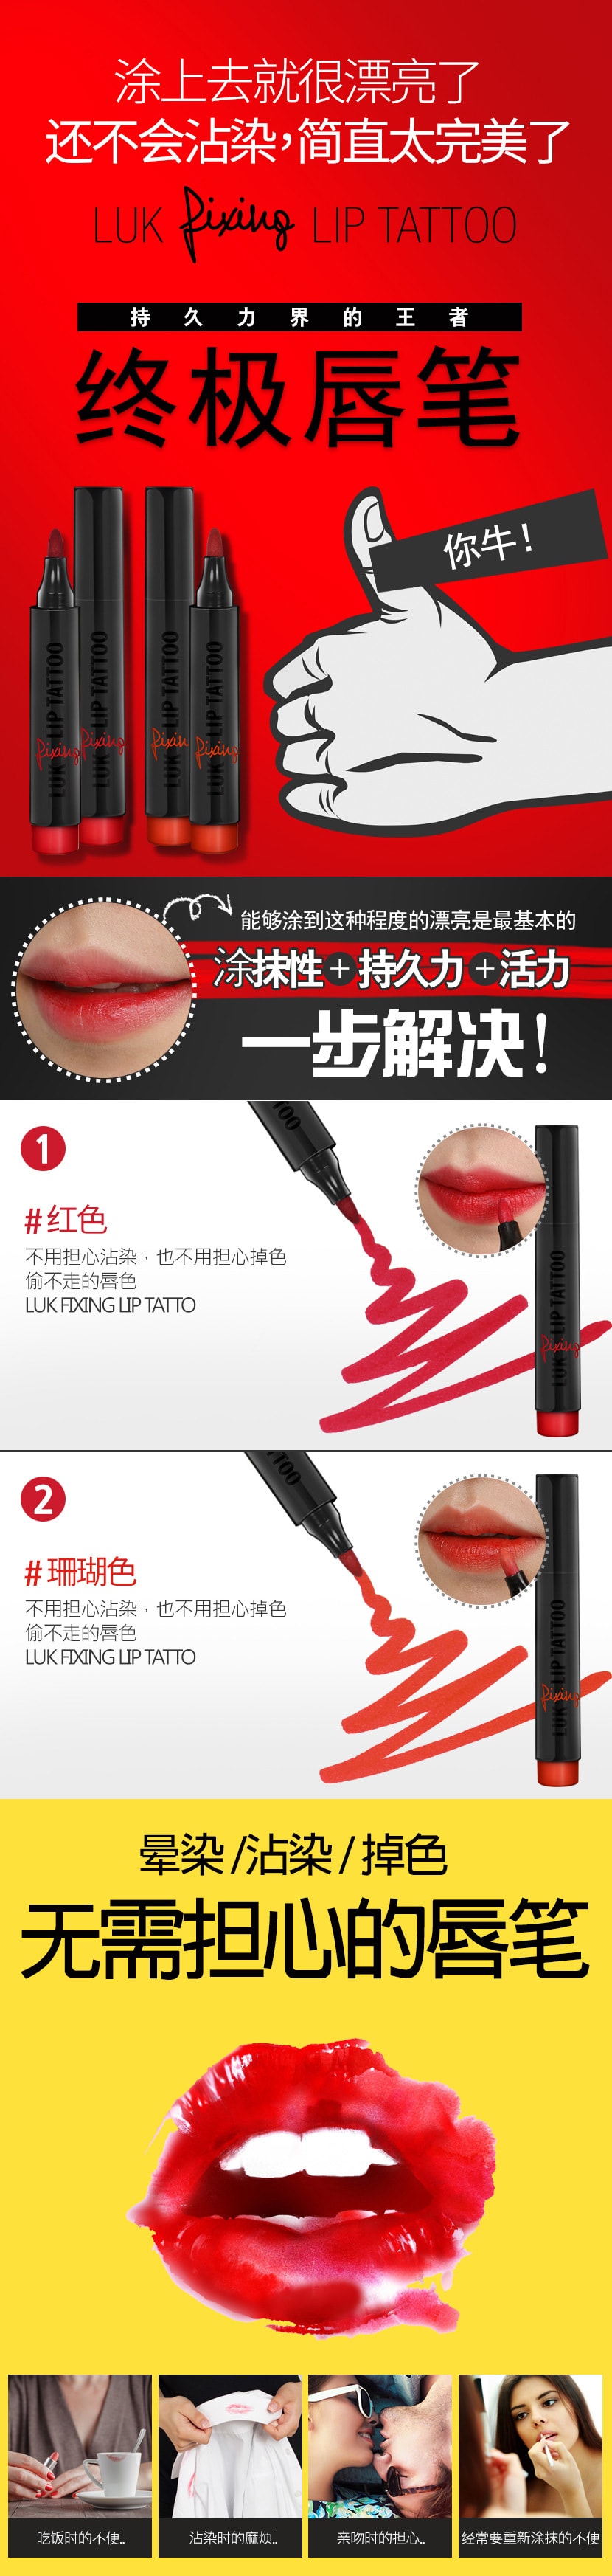 韩国 LUK Fixing Lip Tattoo 纹唇笔 #红色